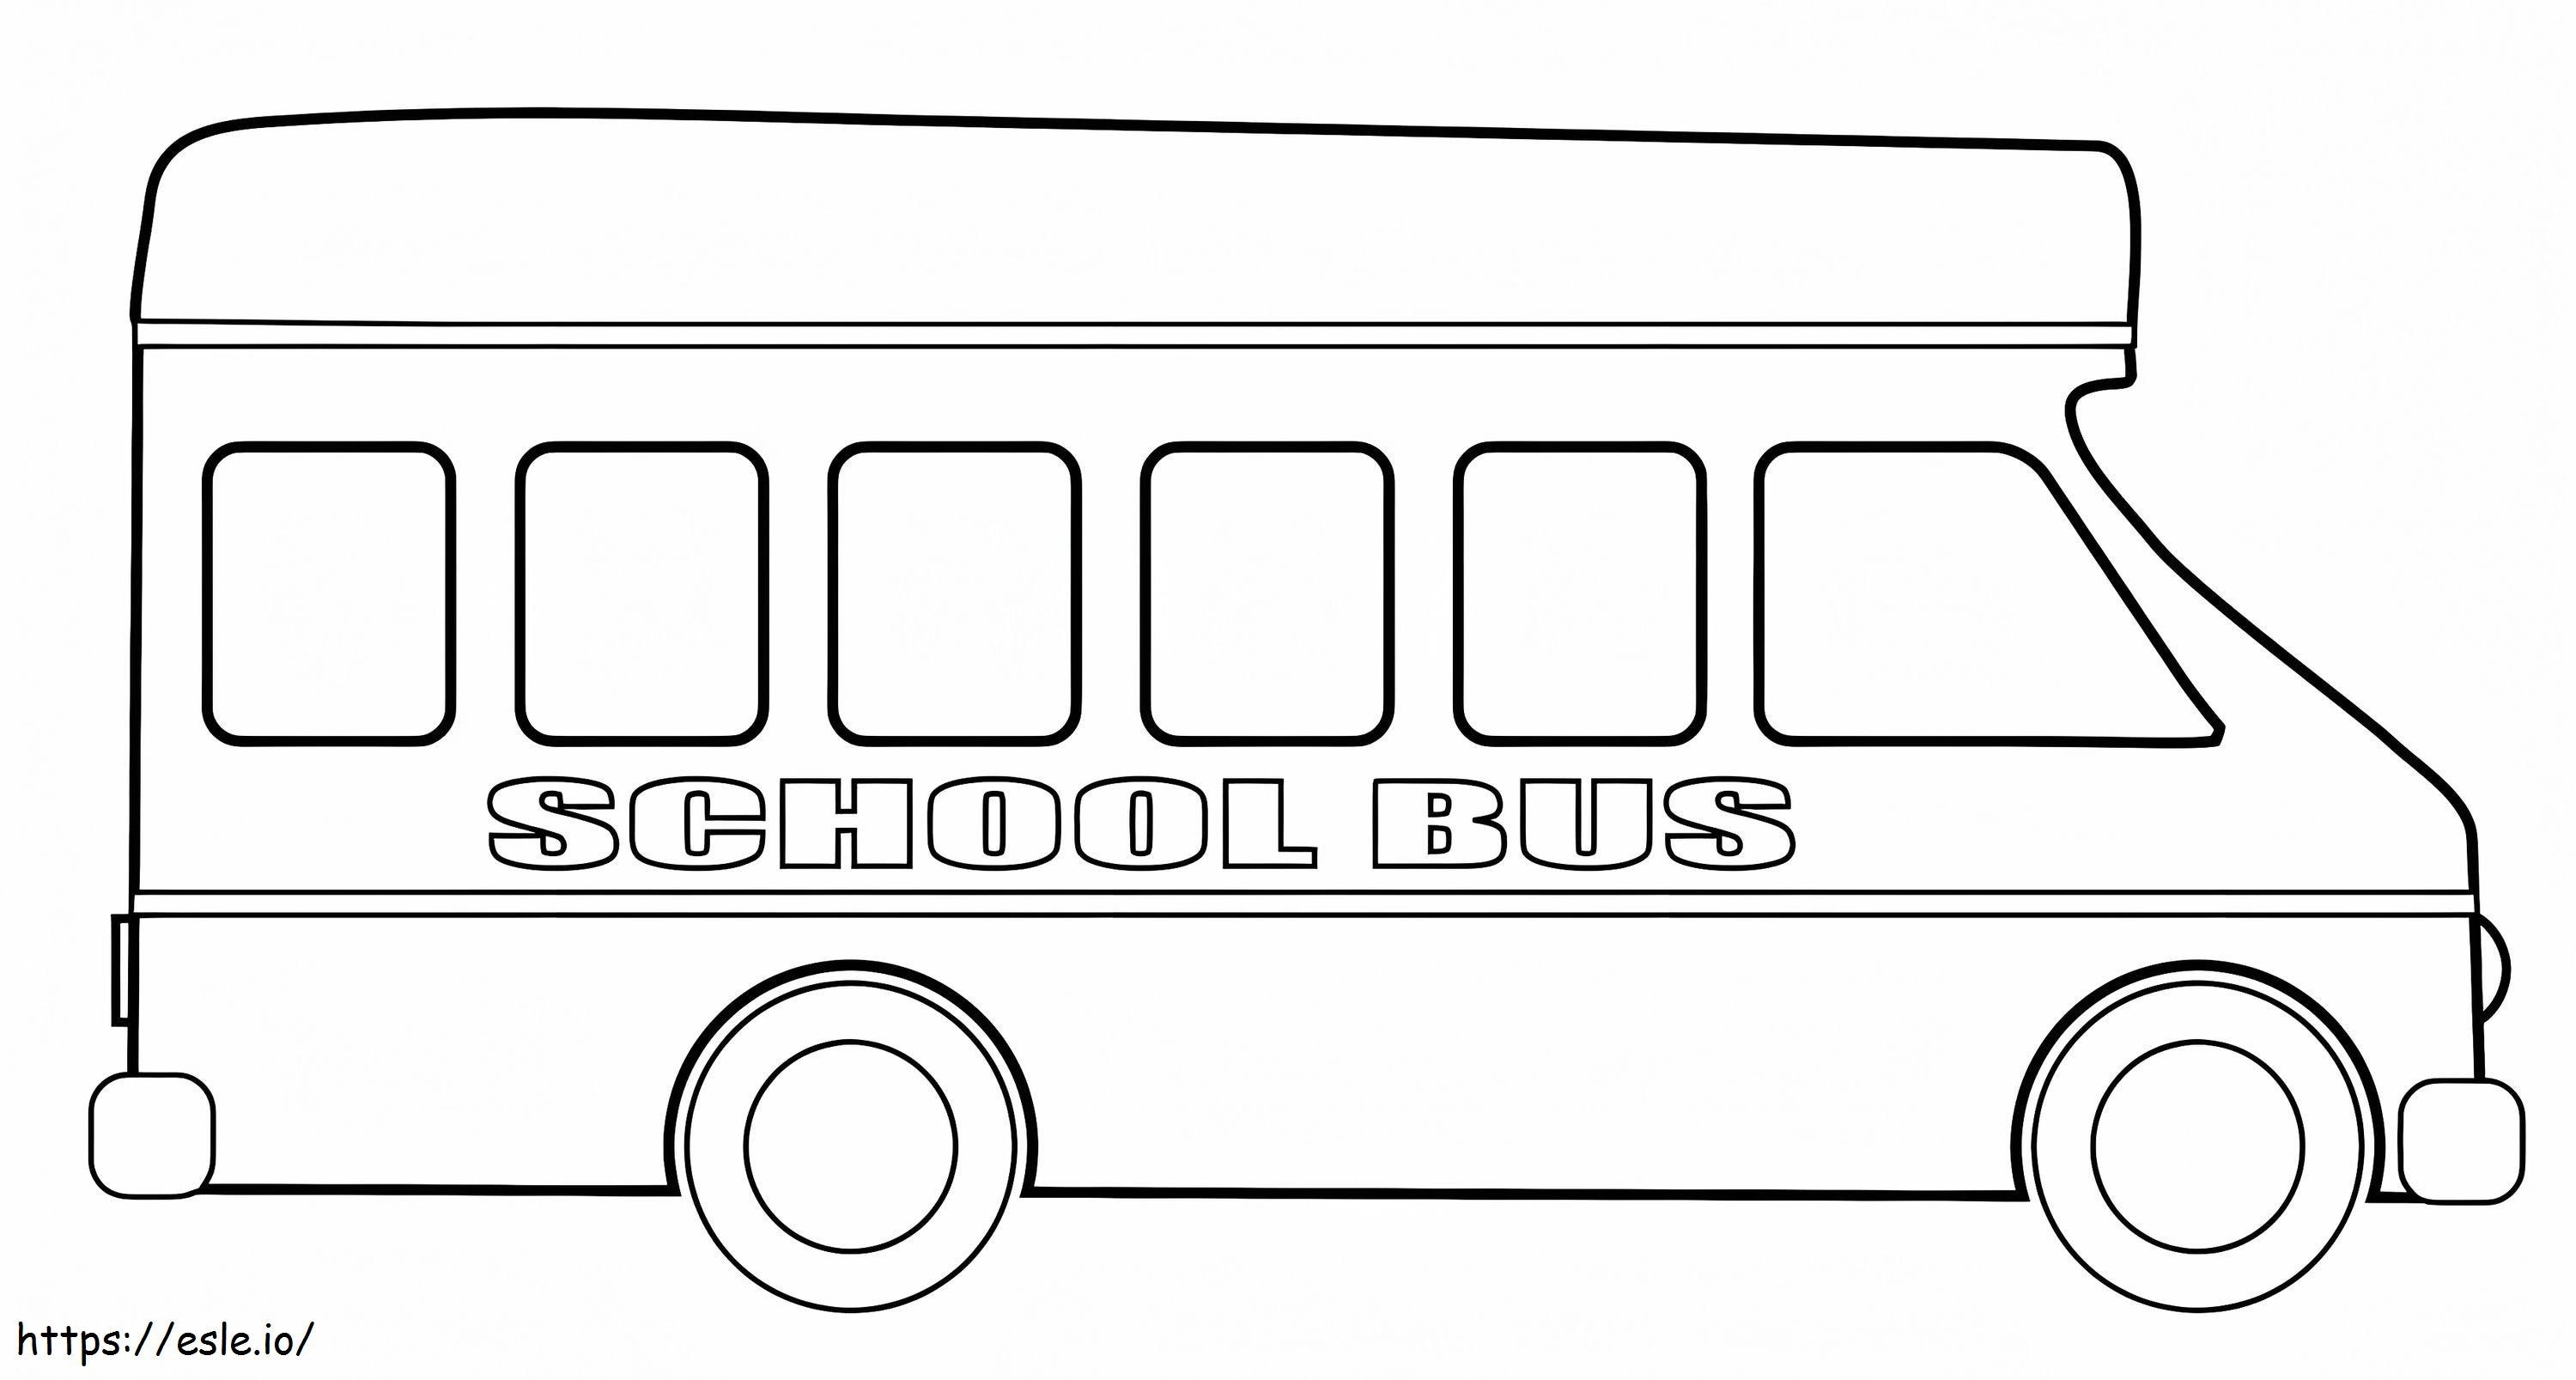 1560589305 A School Bus A4 E1600079883412 coloring page